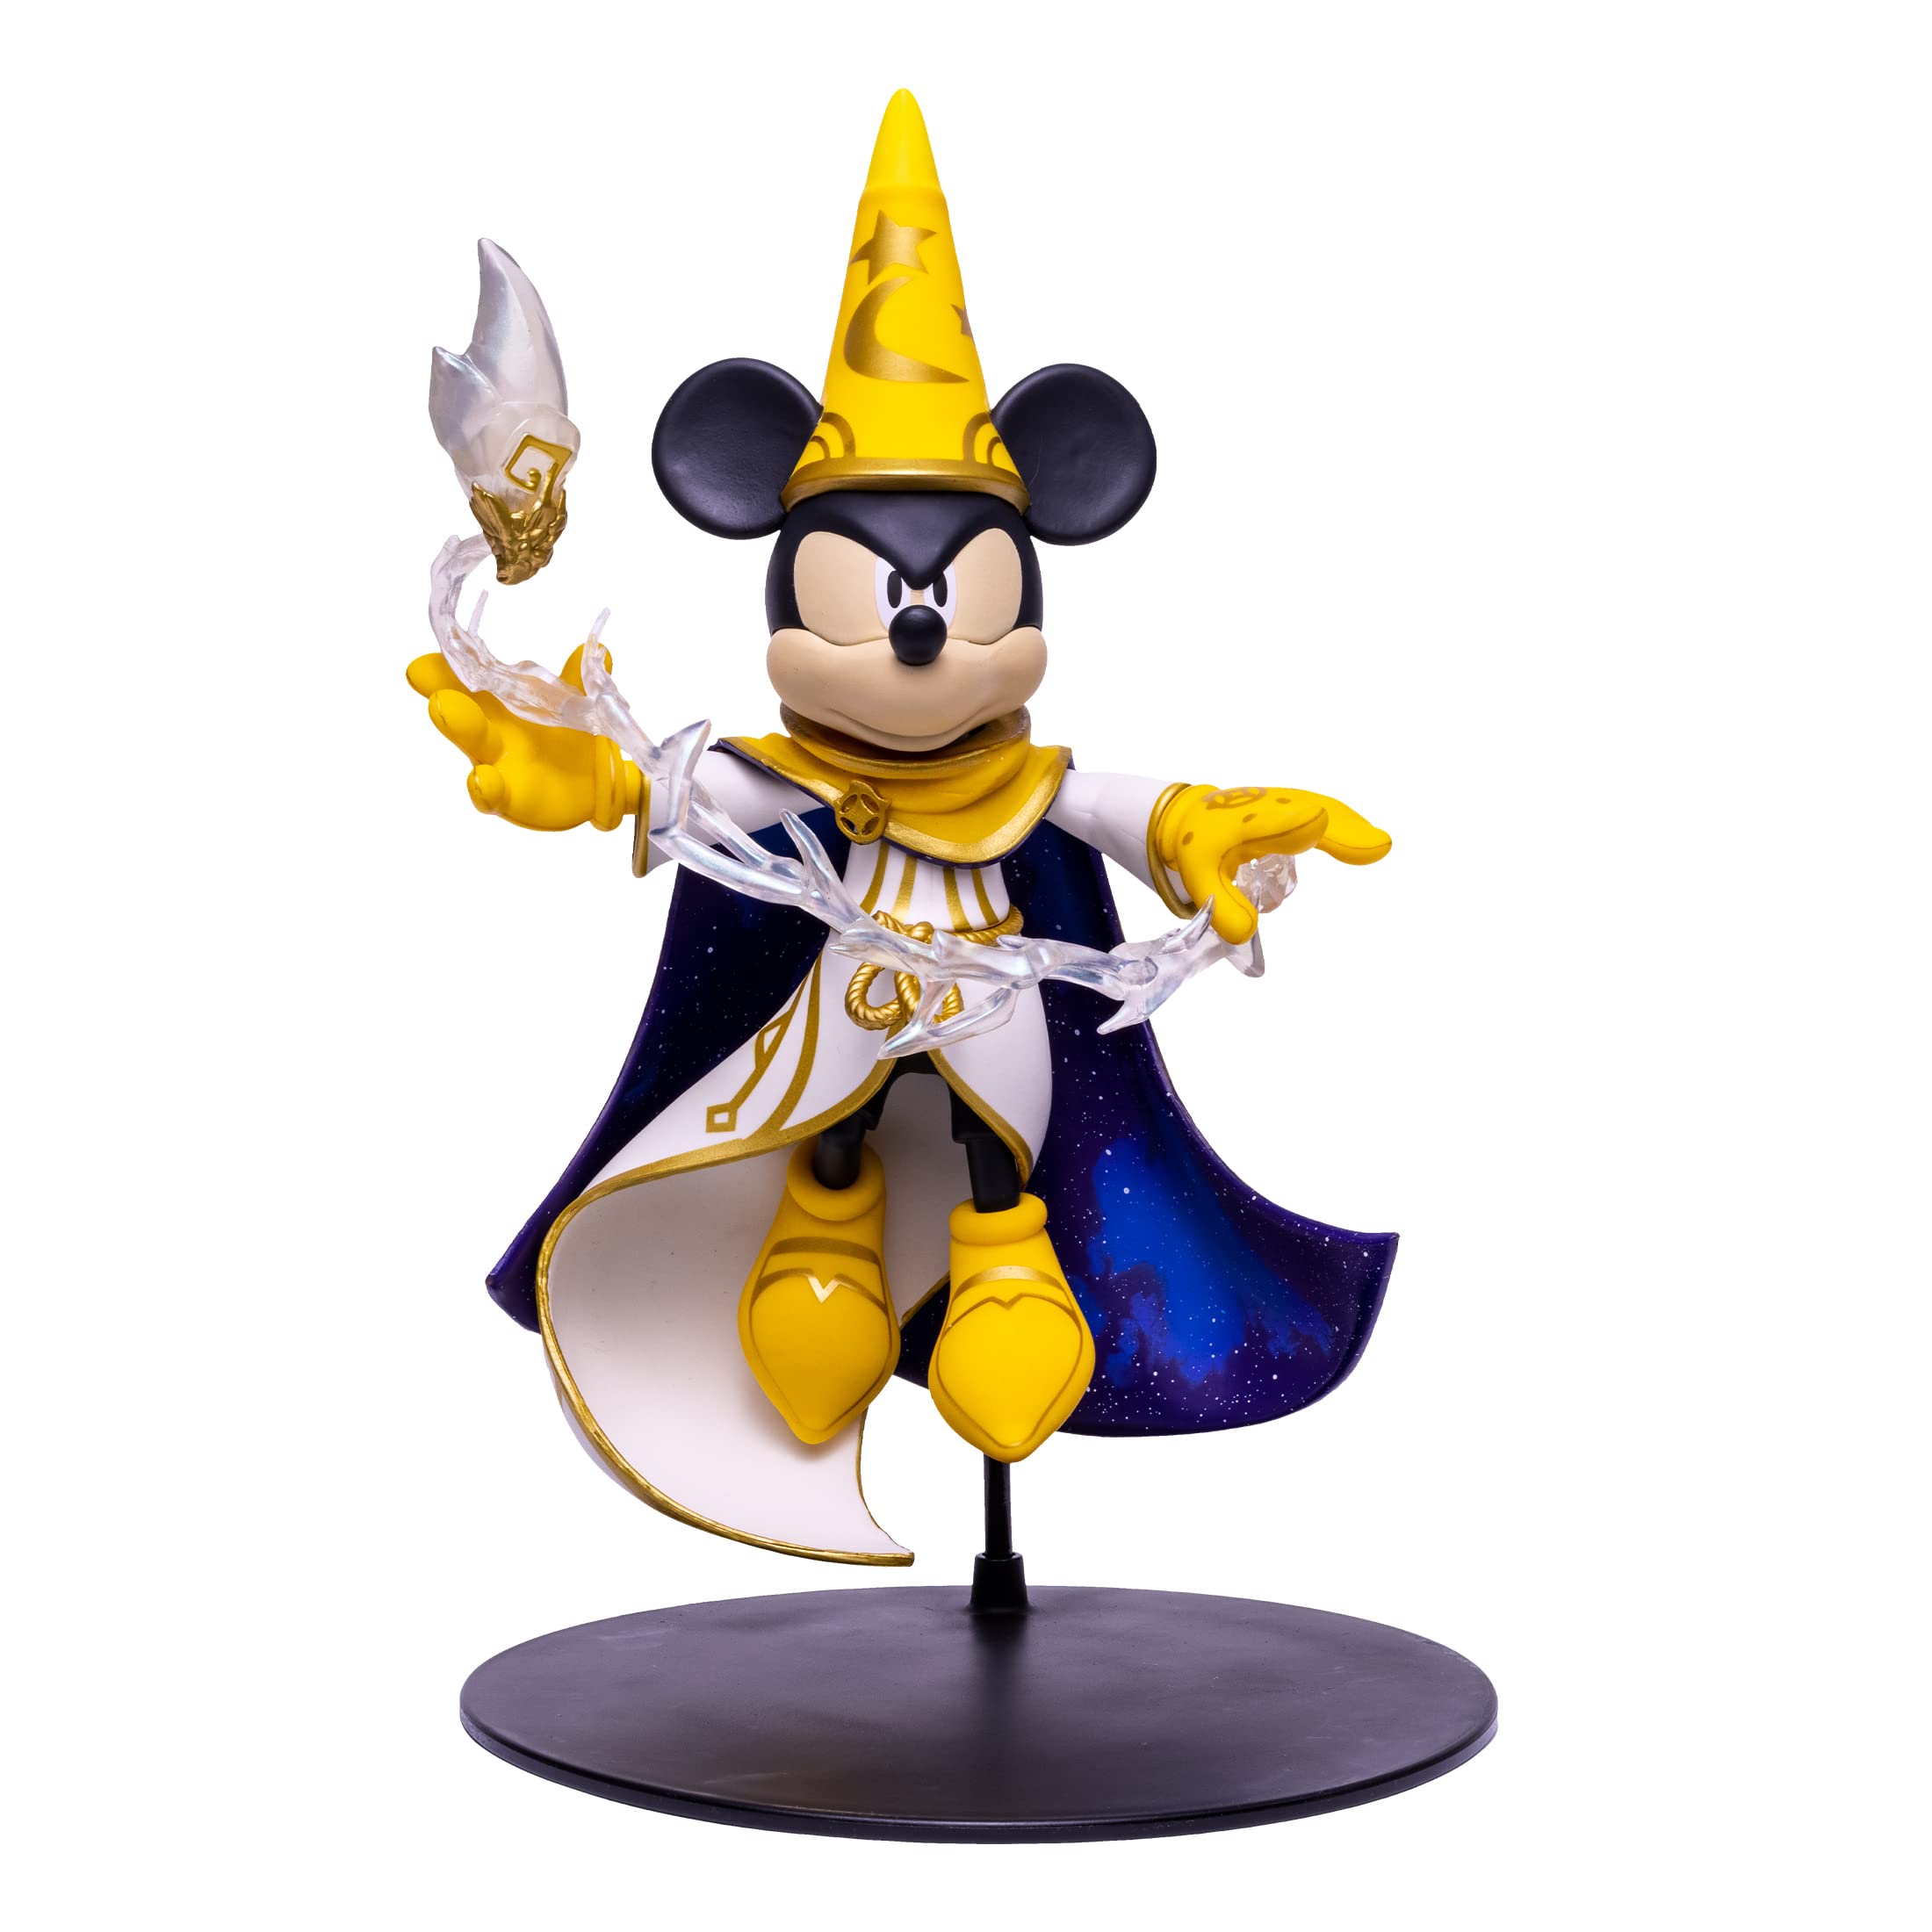 12" McFarlane Disney Mirrorverse Mickey Mouse Deluxe Figure $10.79 + Free Shipping w/ Prime or on $35+